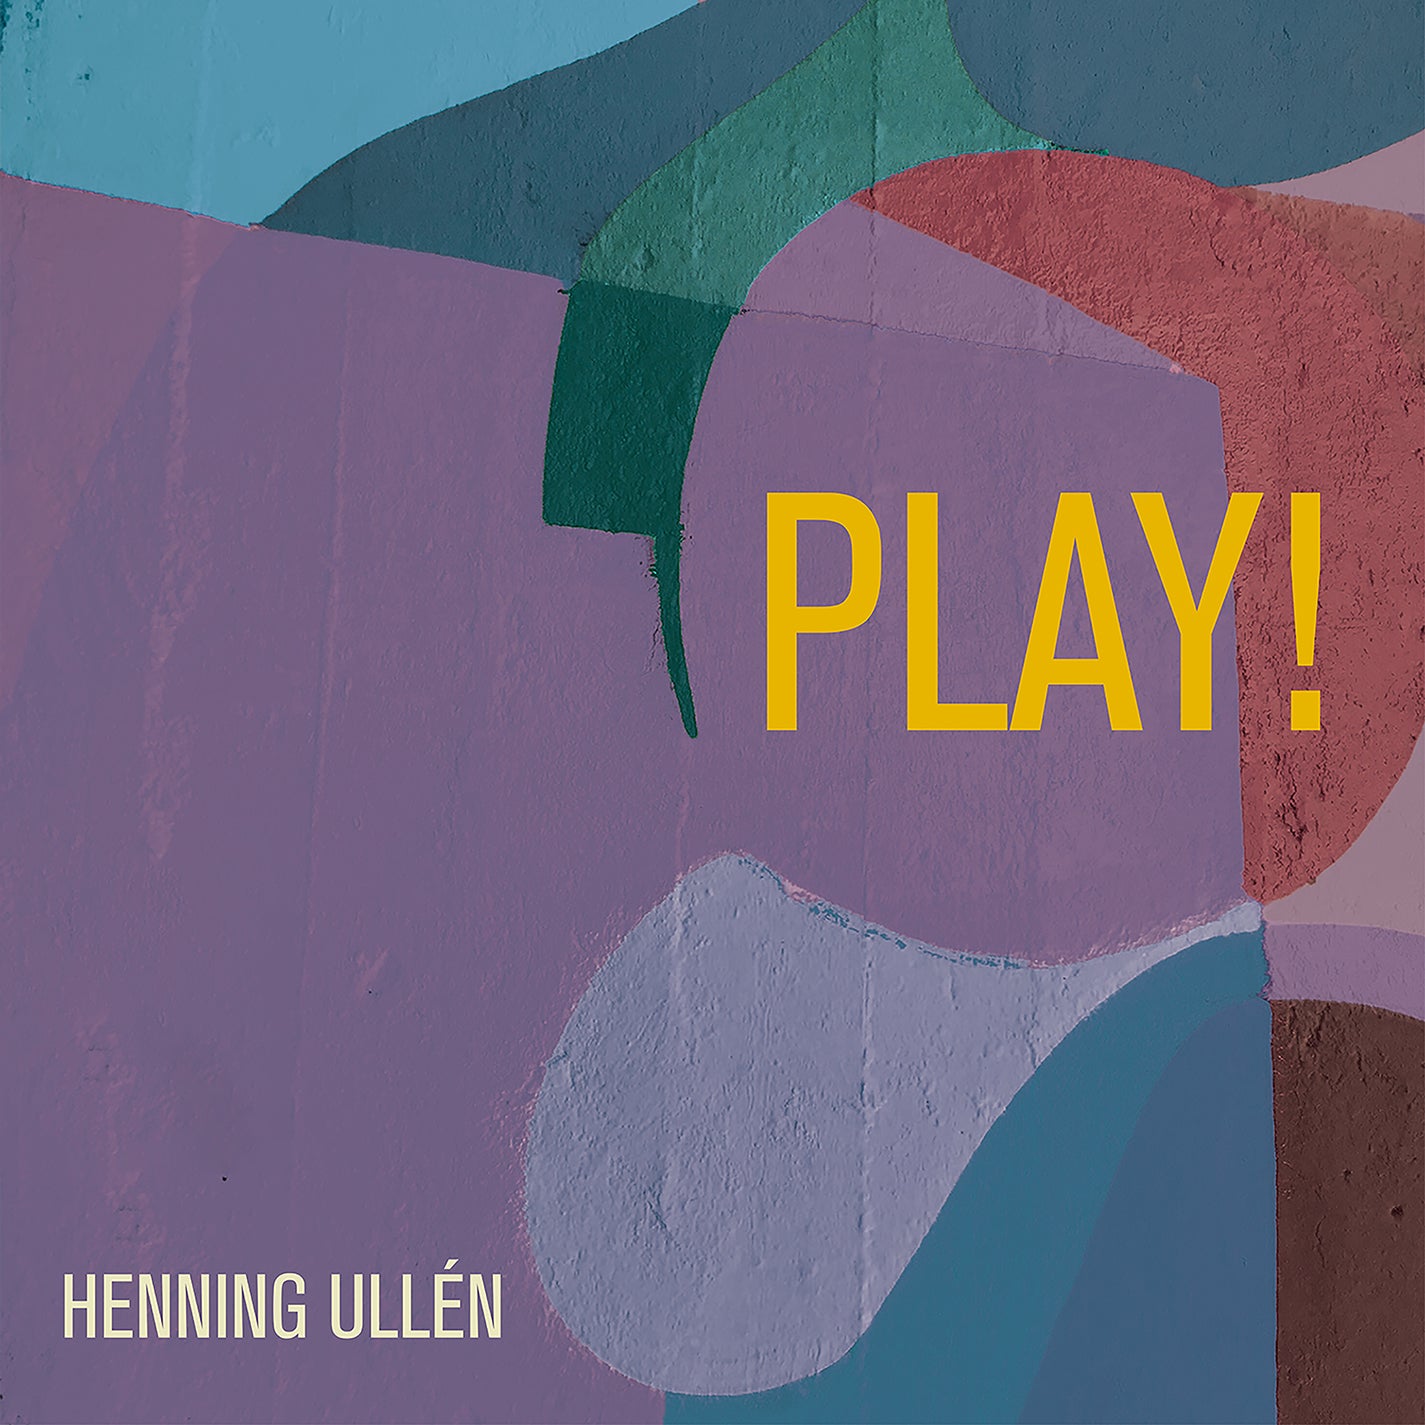 Play! / Henning Ullén + Nils & Mauritz Agnas